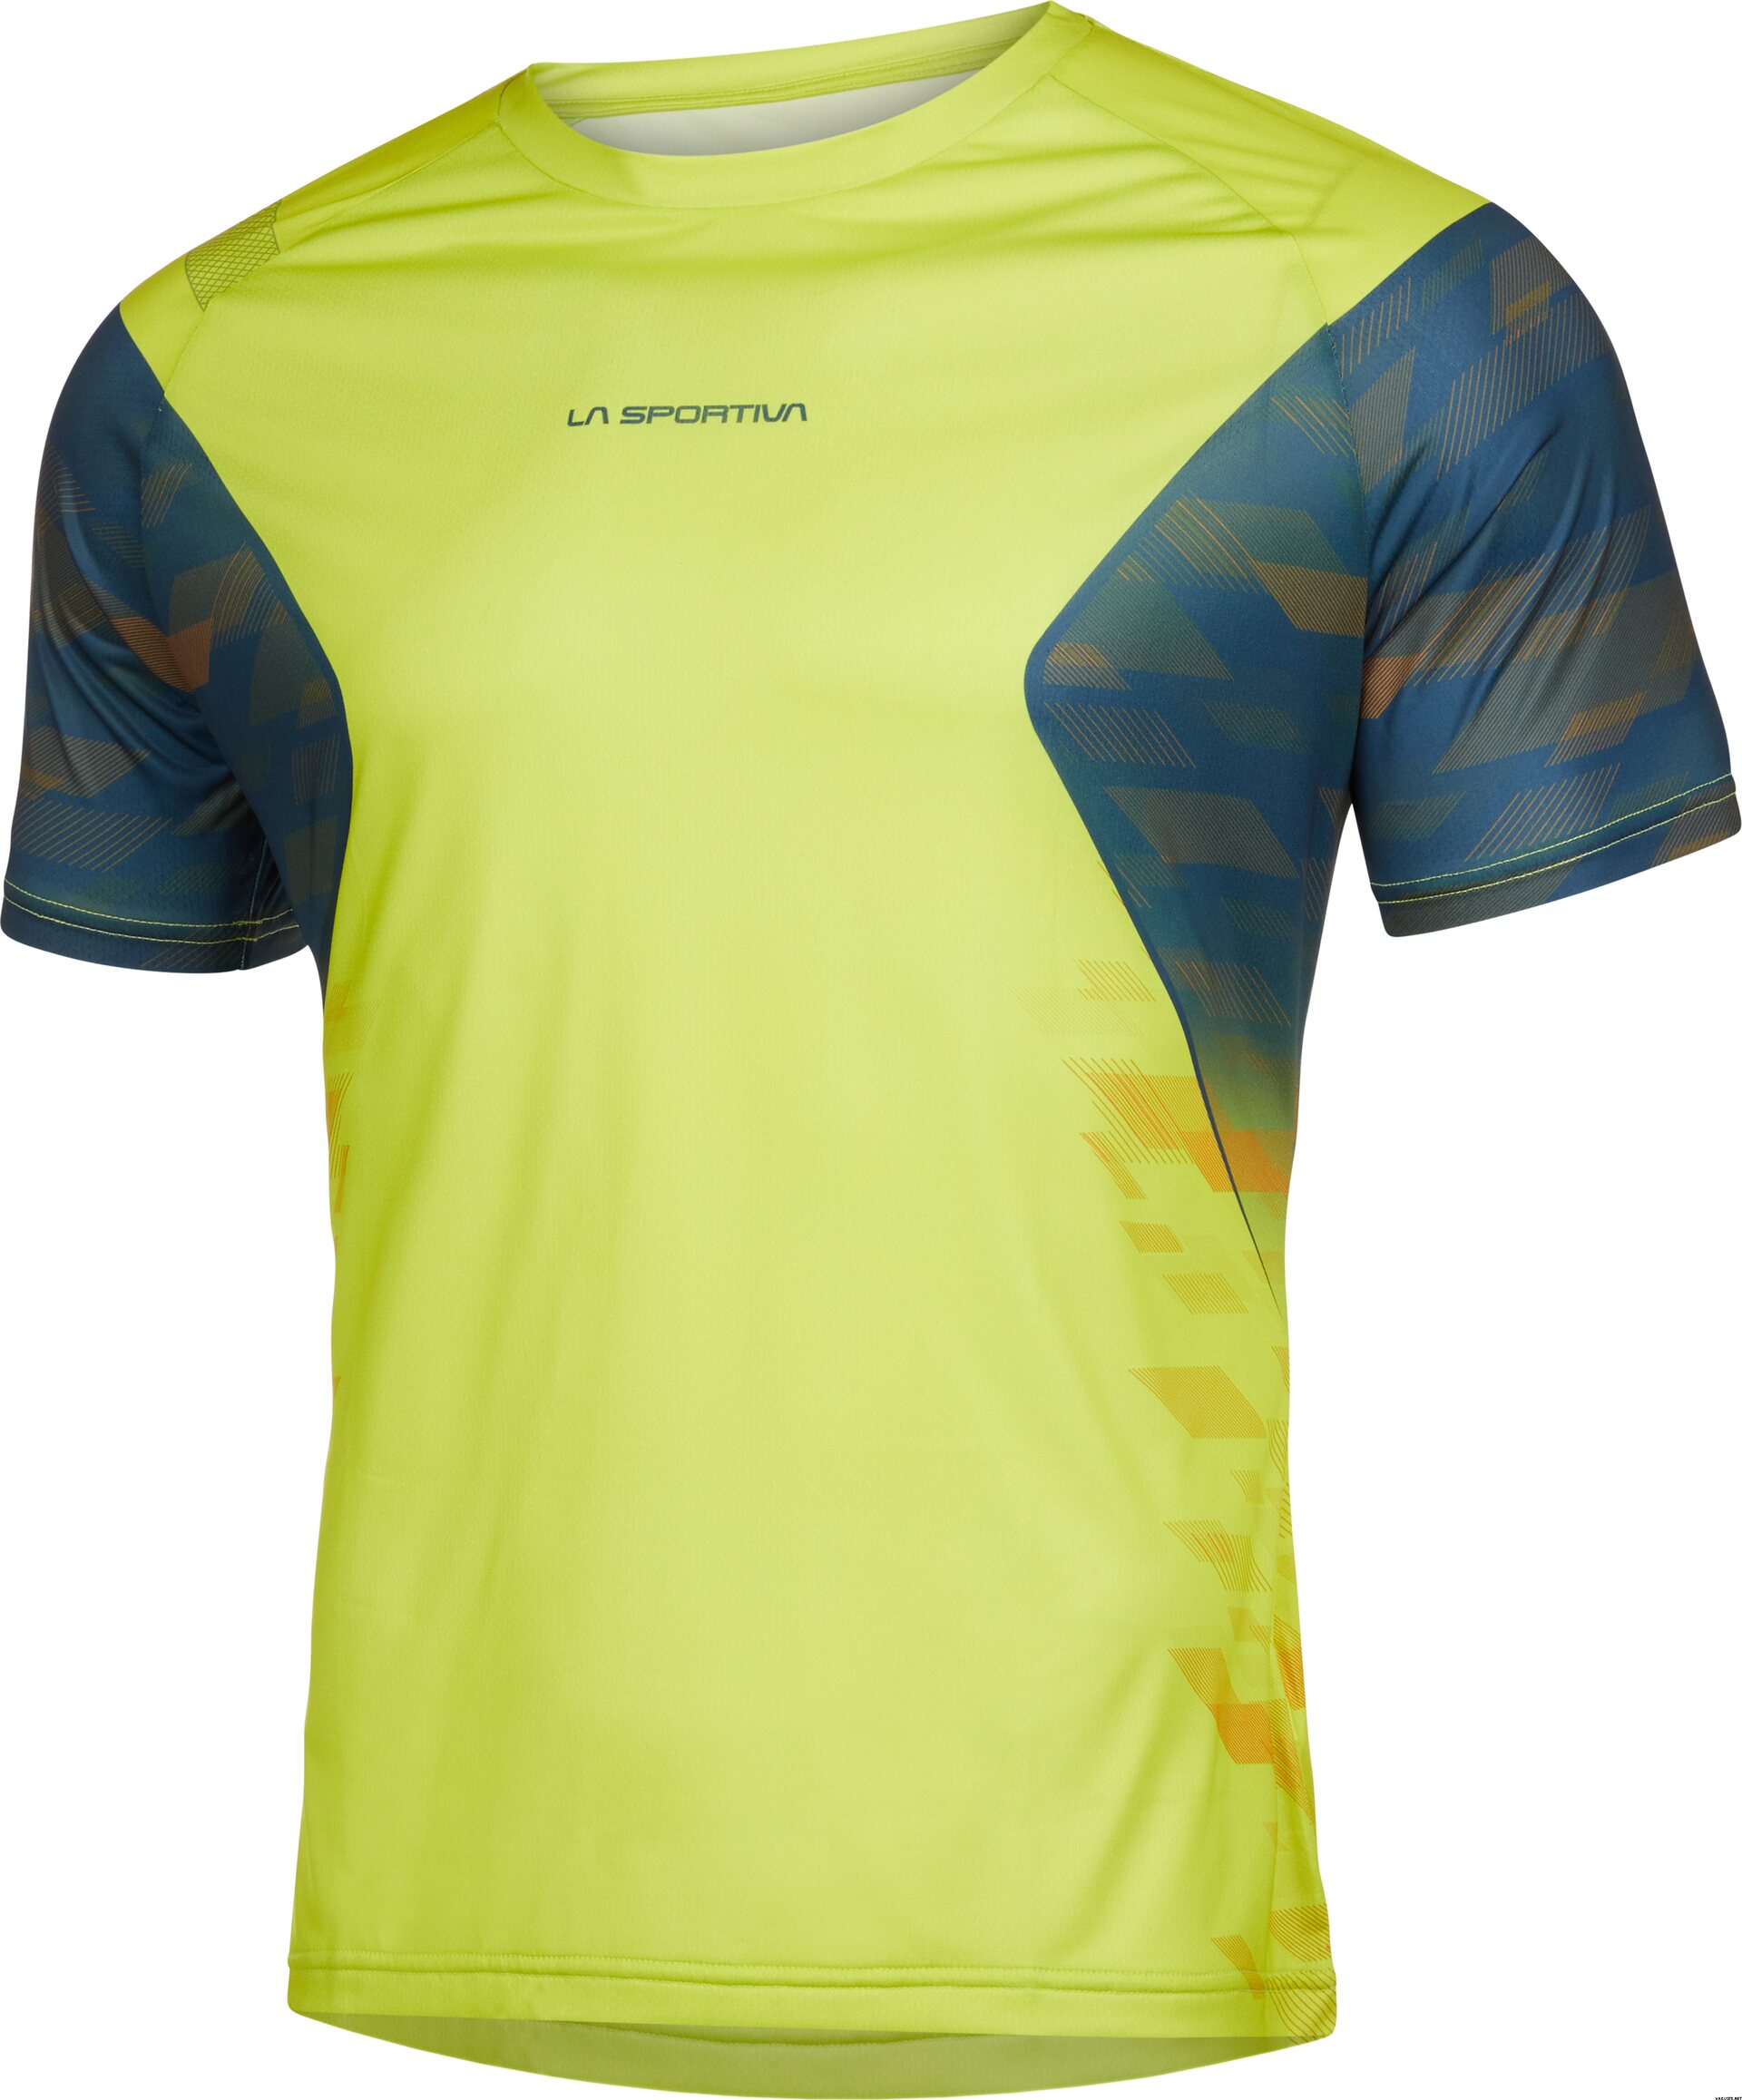 La Sportiva Pacer T-Shirt Mens | Men's Sport Shirts | Varuste.net